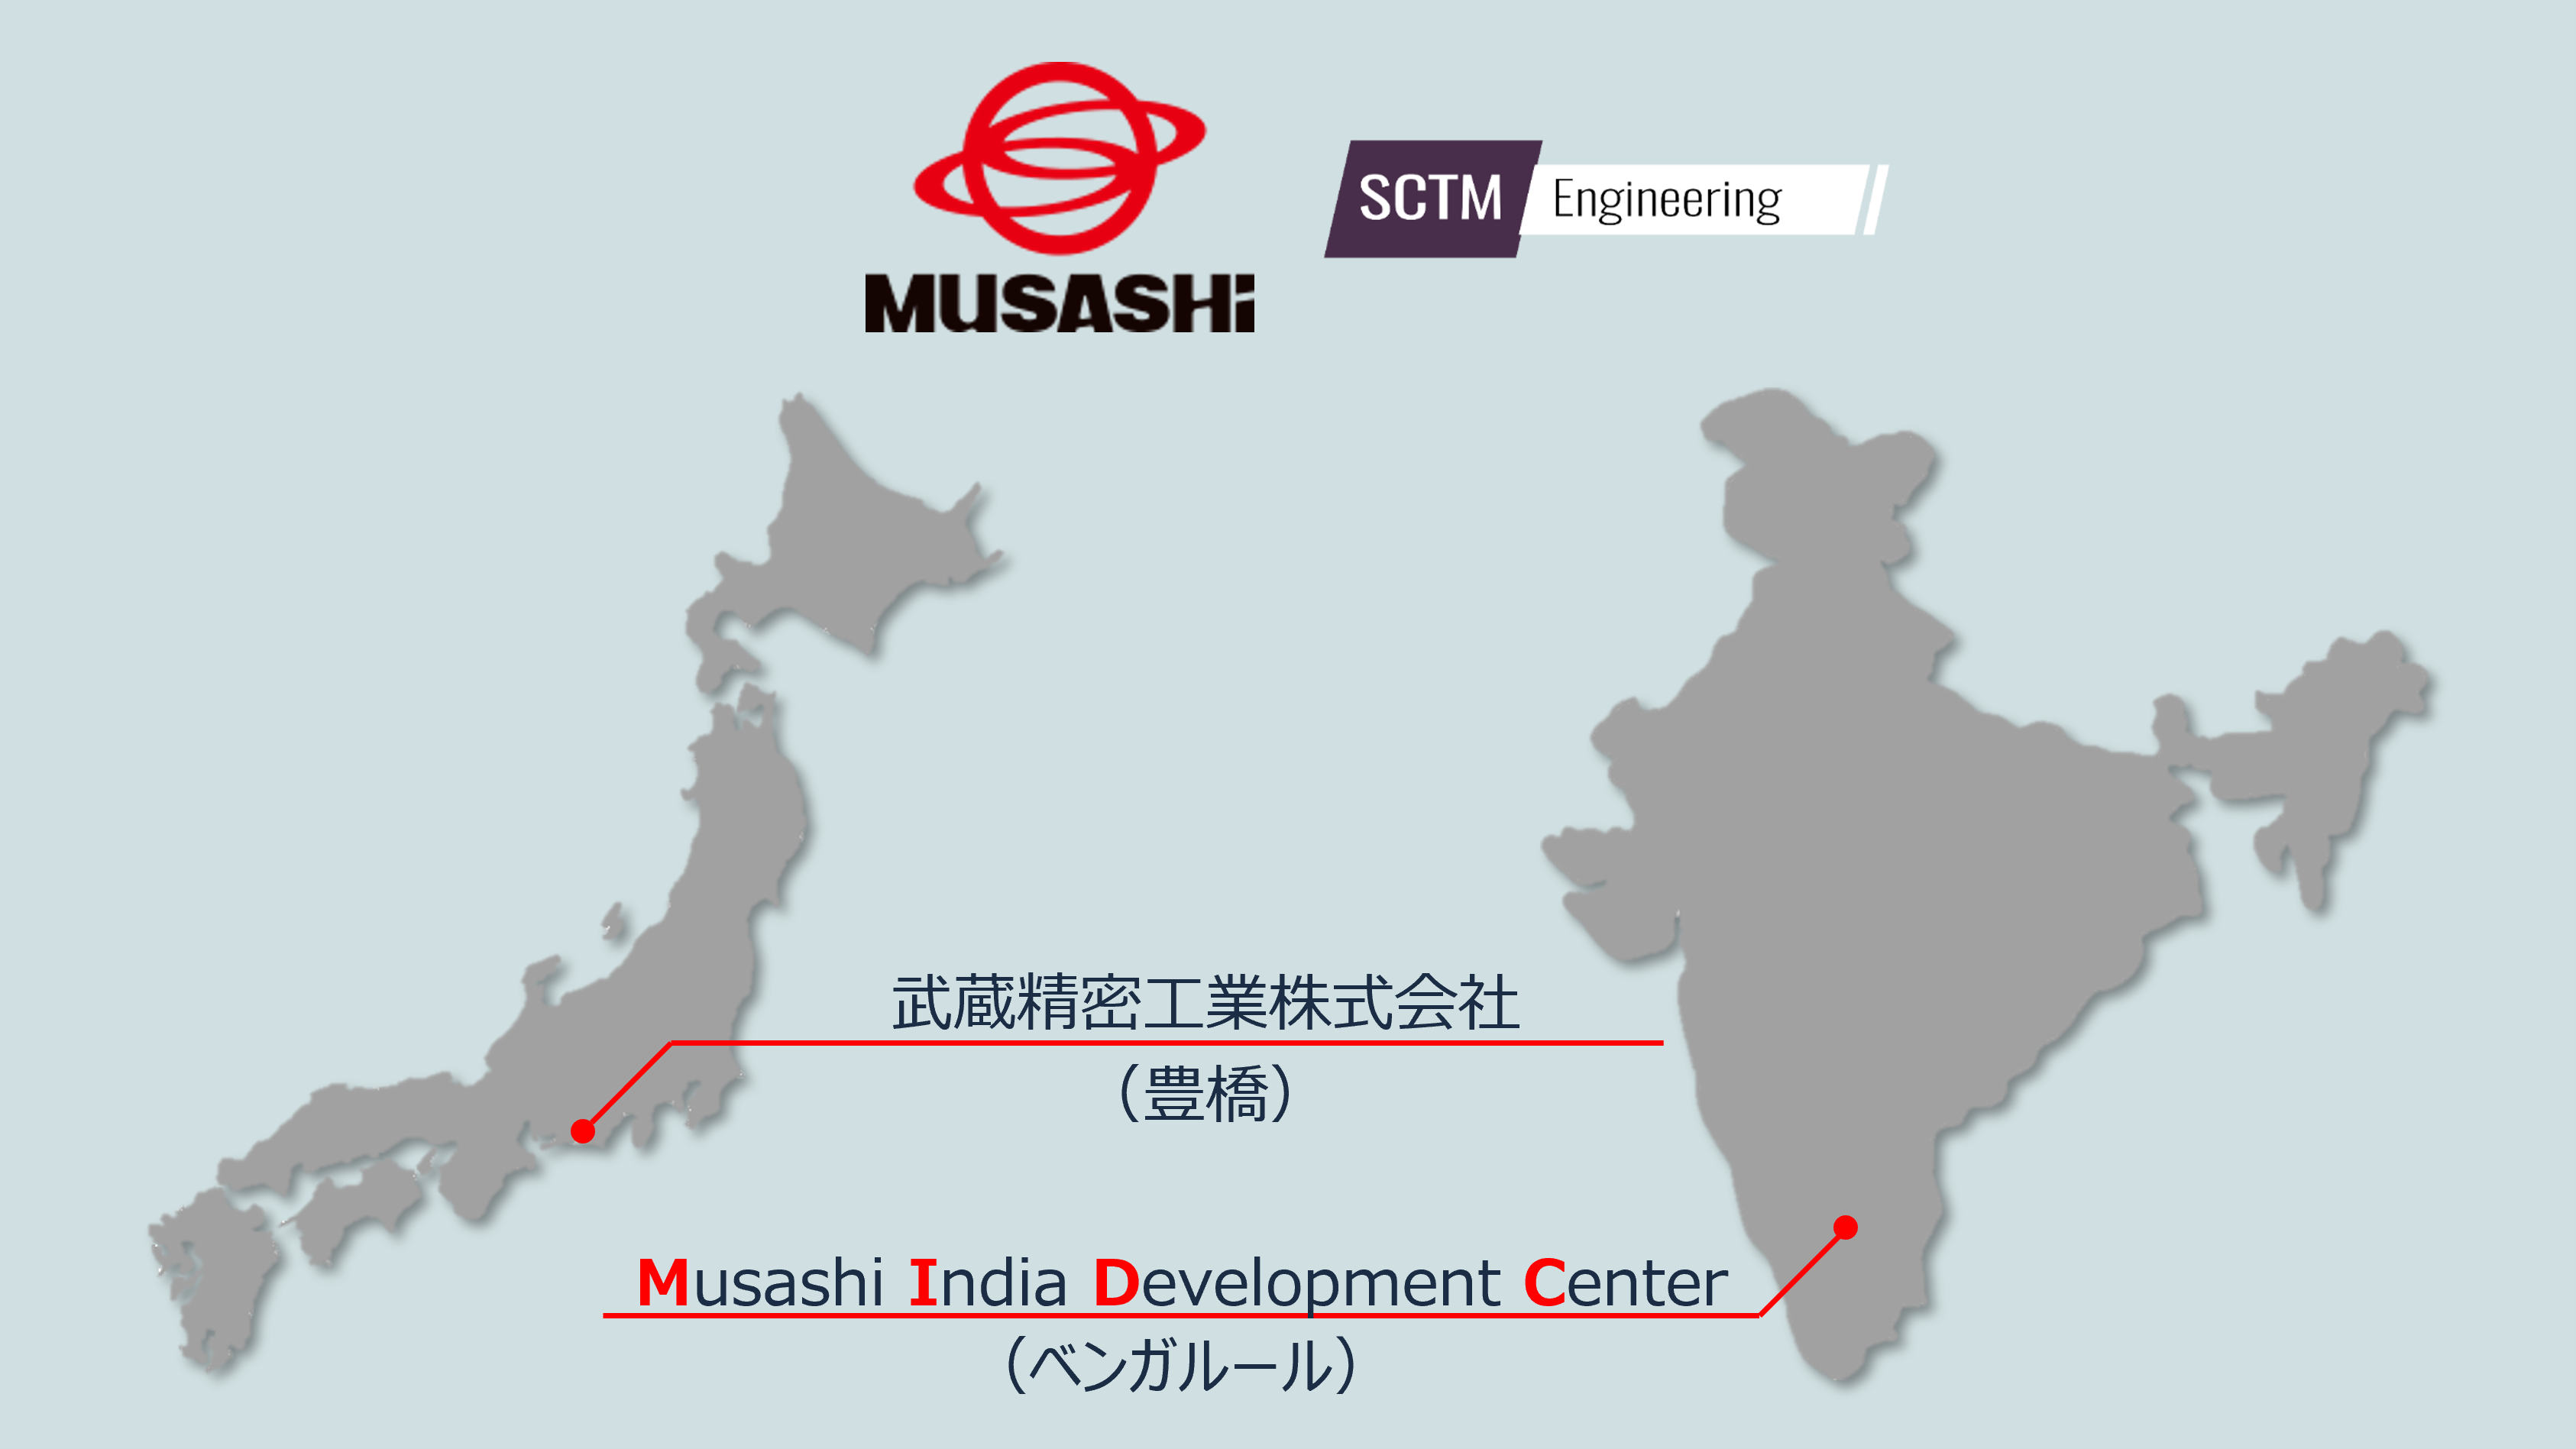 news-musashi-eaxle-development-image-ja.png